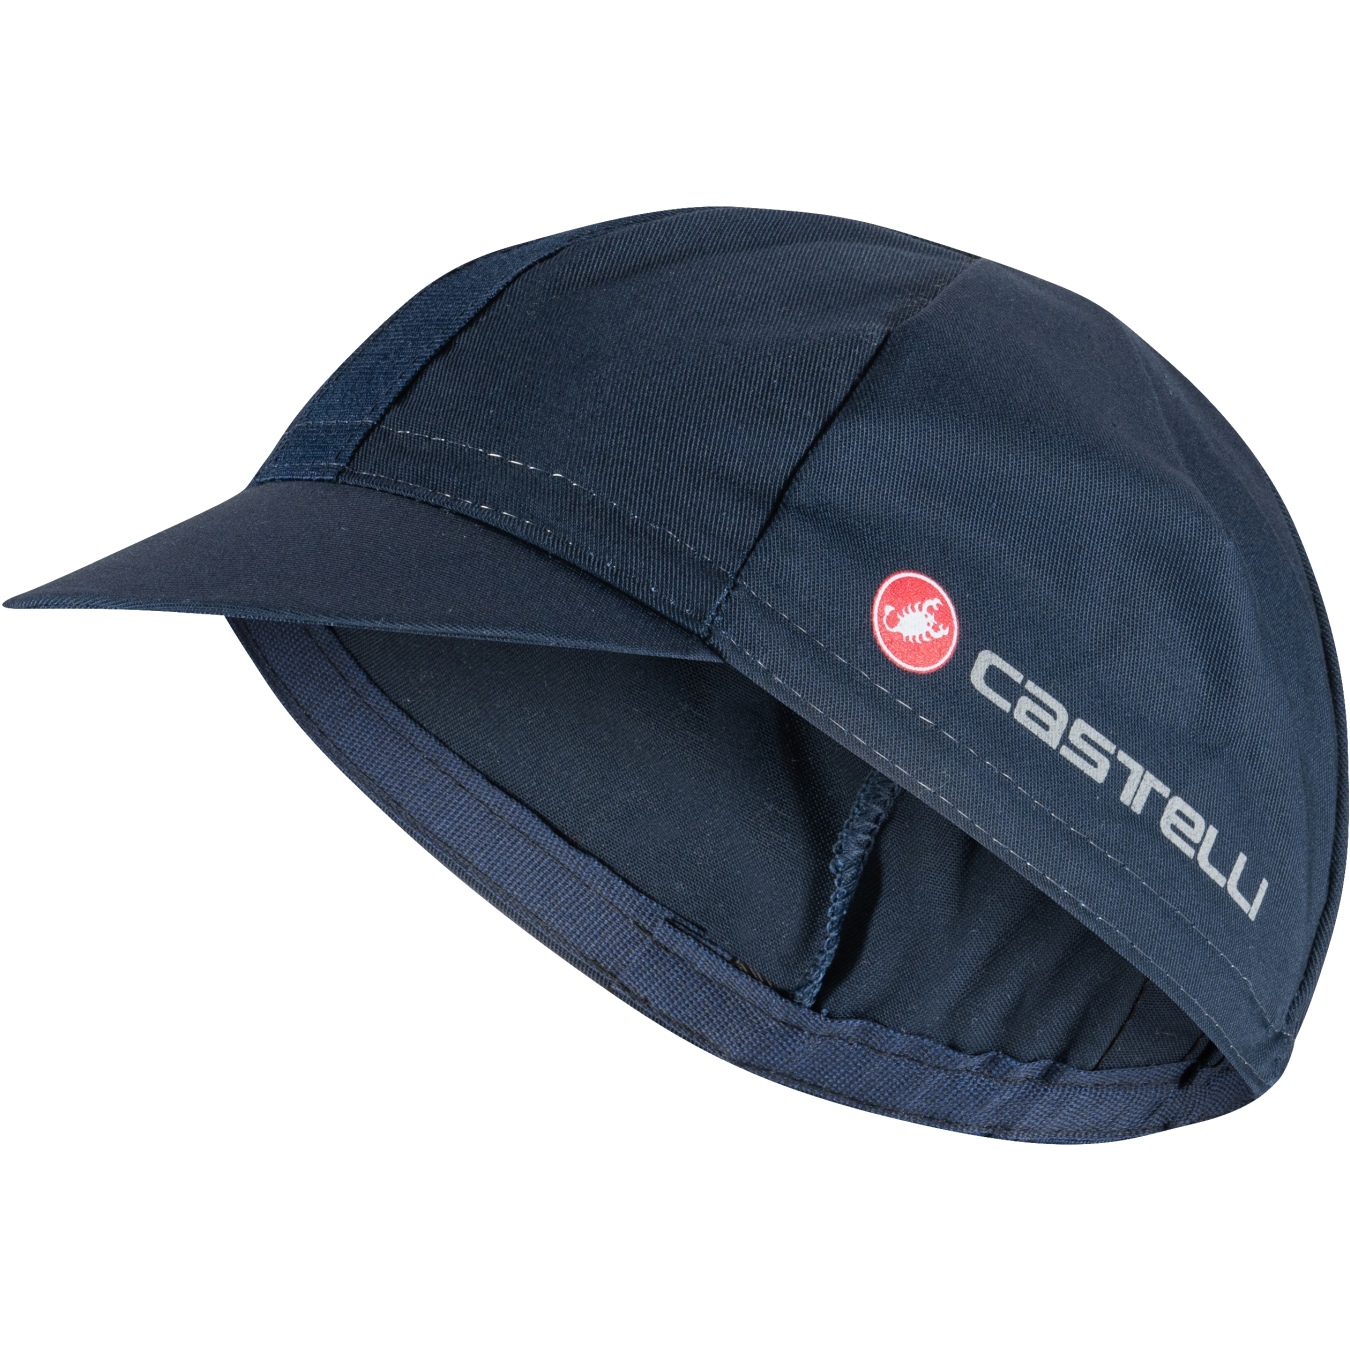 Picture of Castelli Endurance Cap - belgian blue 424